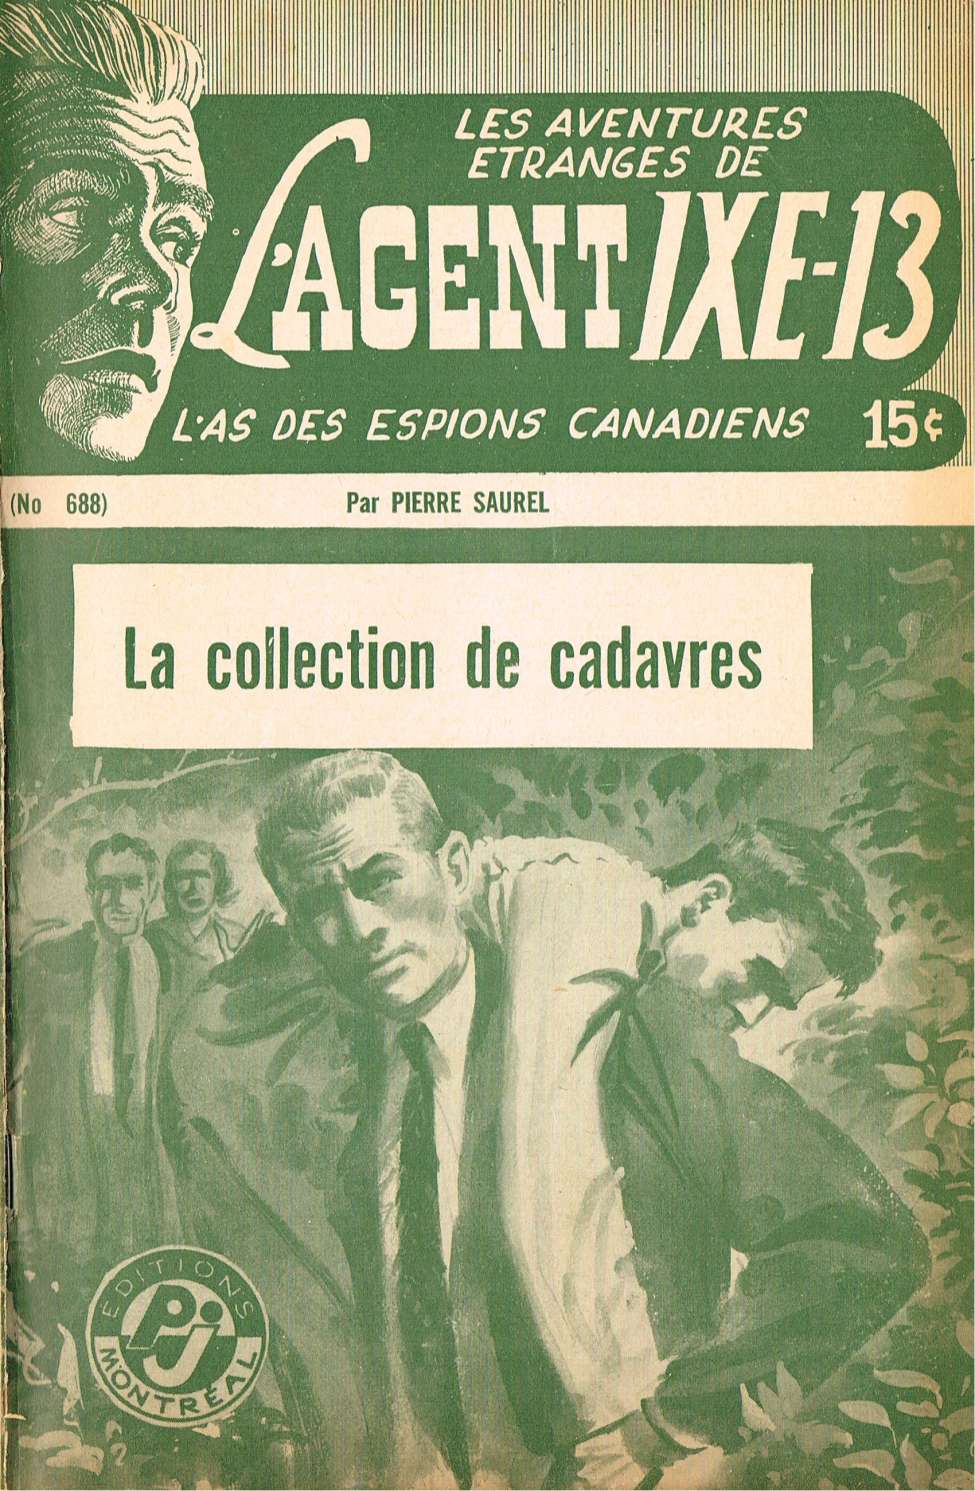 Book Cover For L'Agent IXE-13 v2 688 - La collection de cadavres